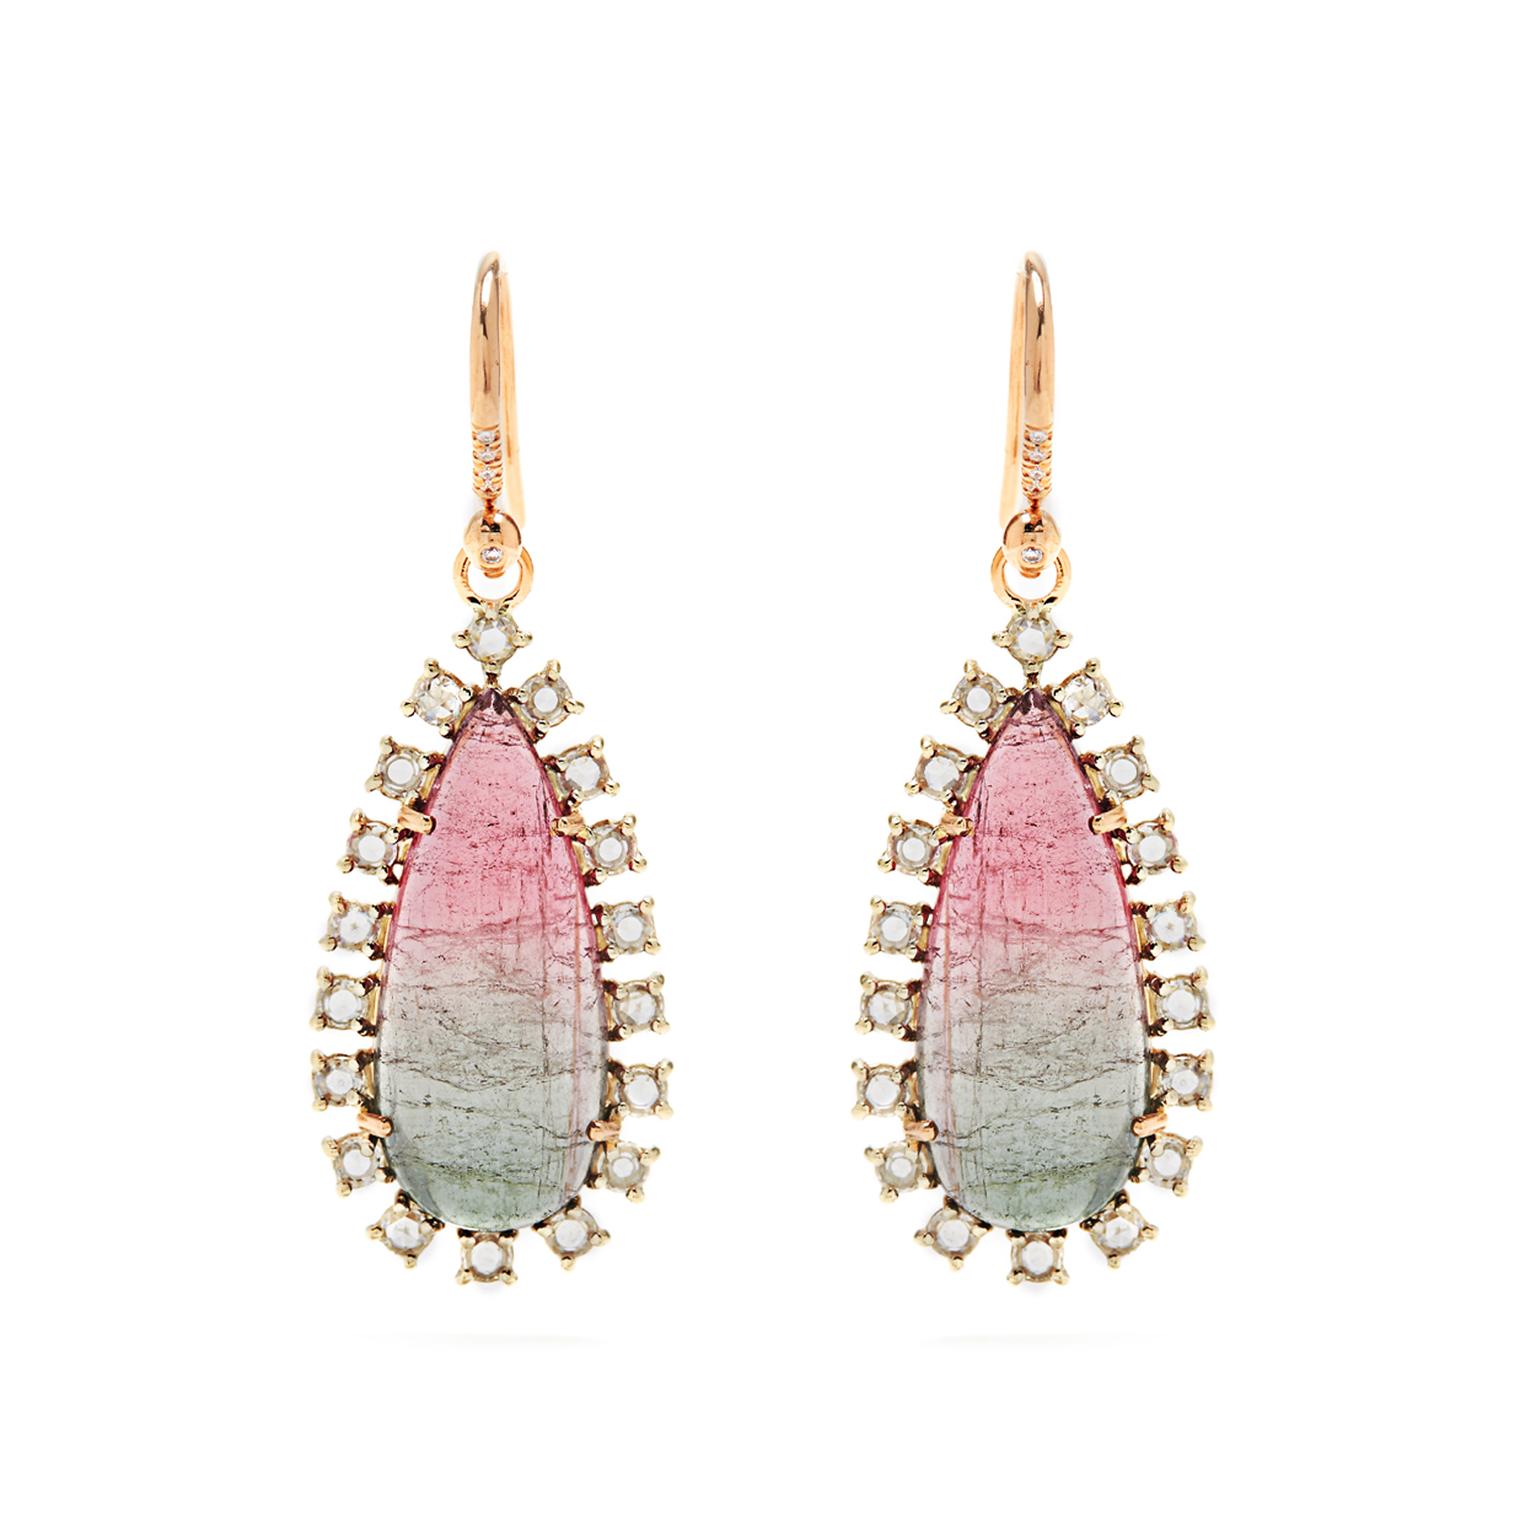 Irene Neuwirth watermelon tourmaline earrings with rose-cut diamonds